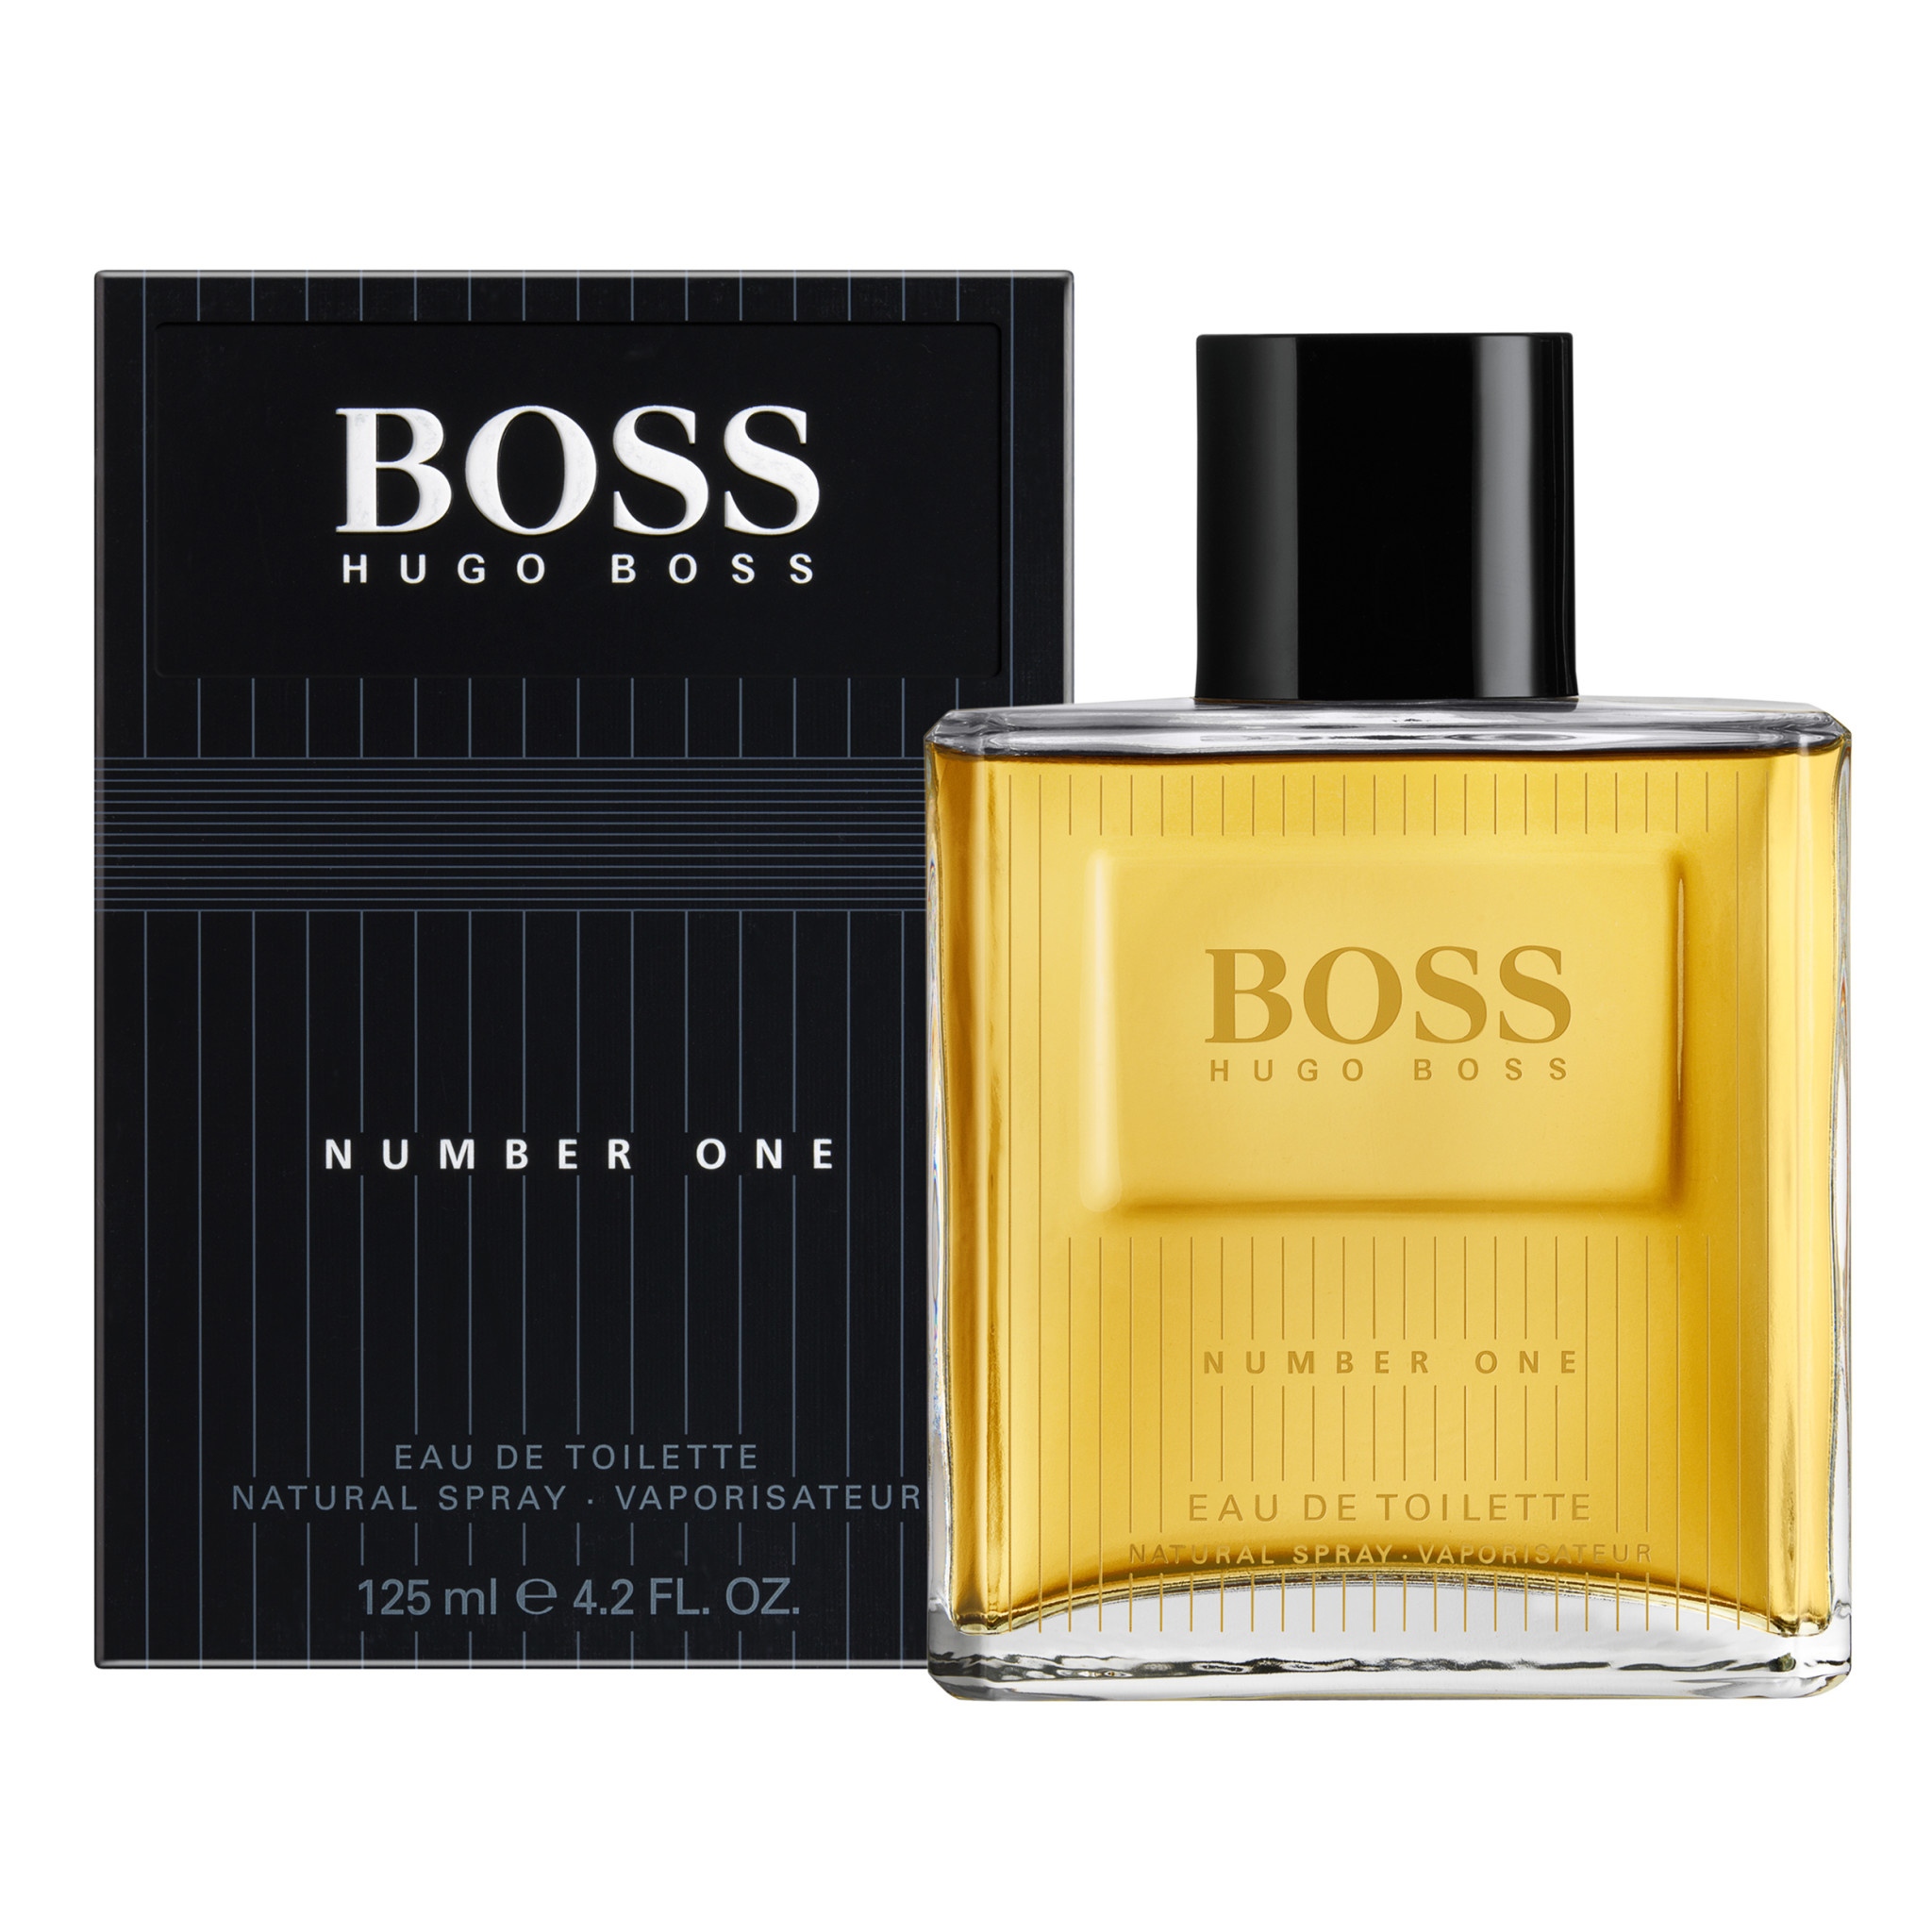 Boss Number One / Boss by Hugo Boss (Eau de Toilette) » Reviews & Perfume  Facts